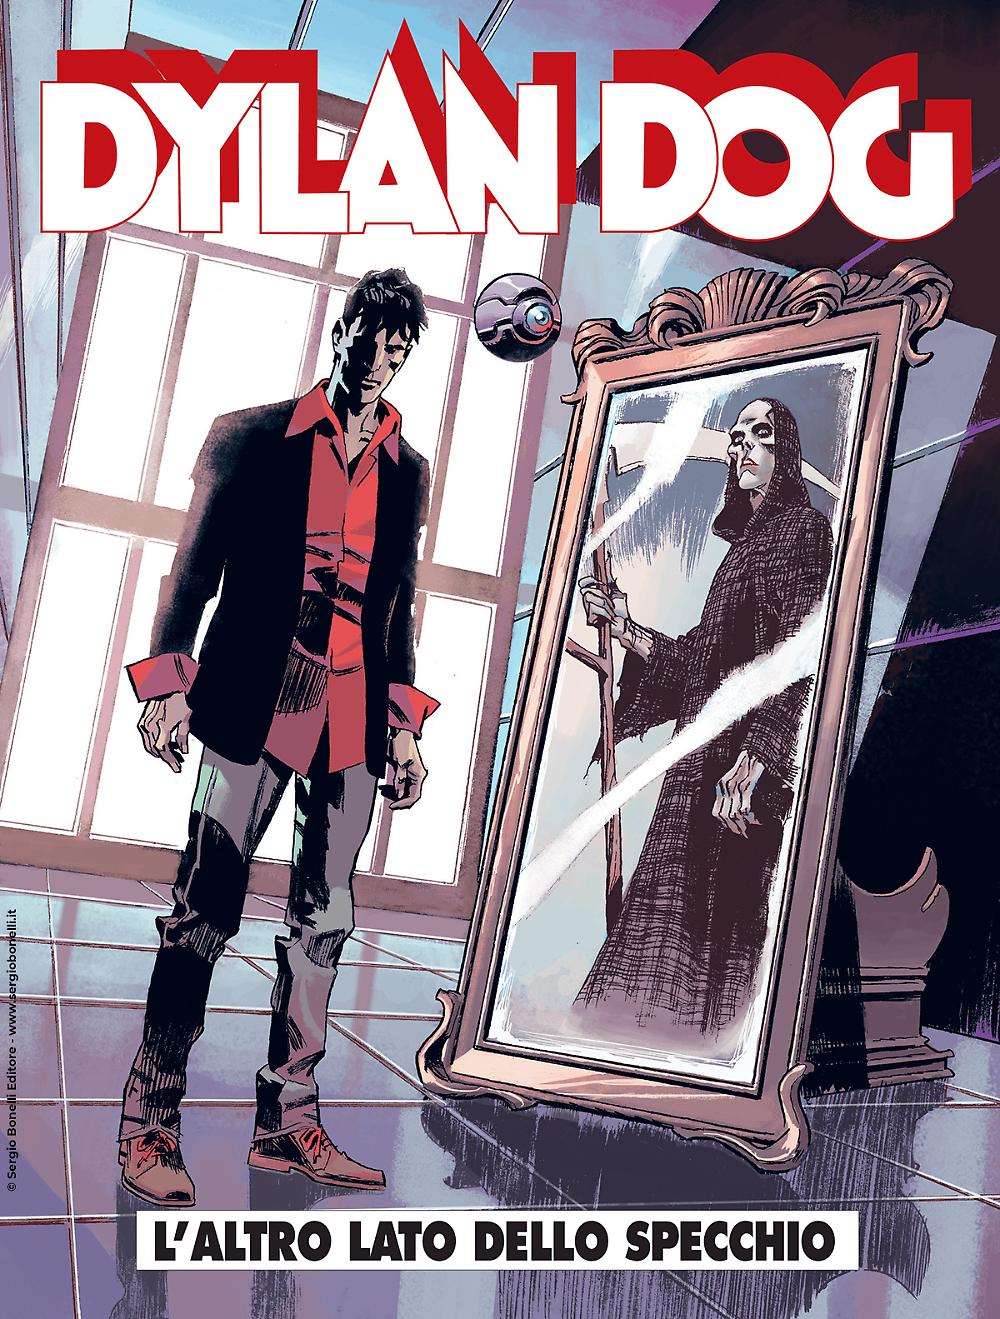 Dylan Dog 446 nerd-pug